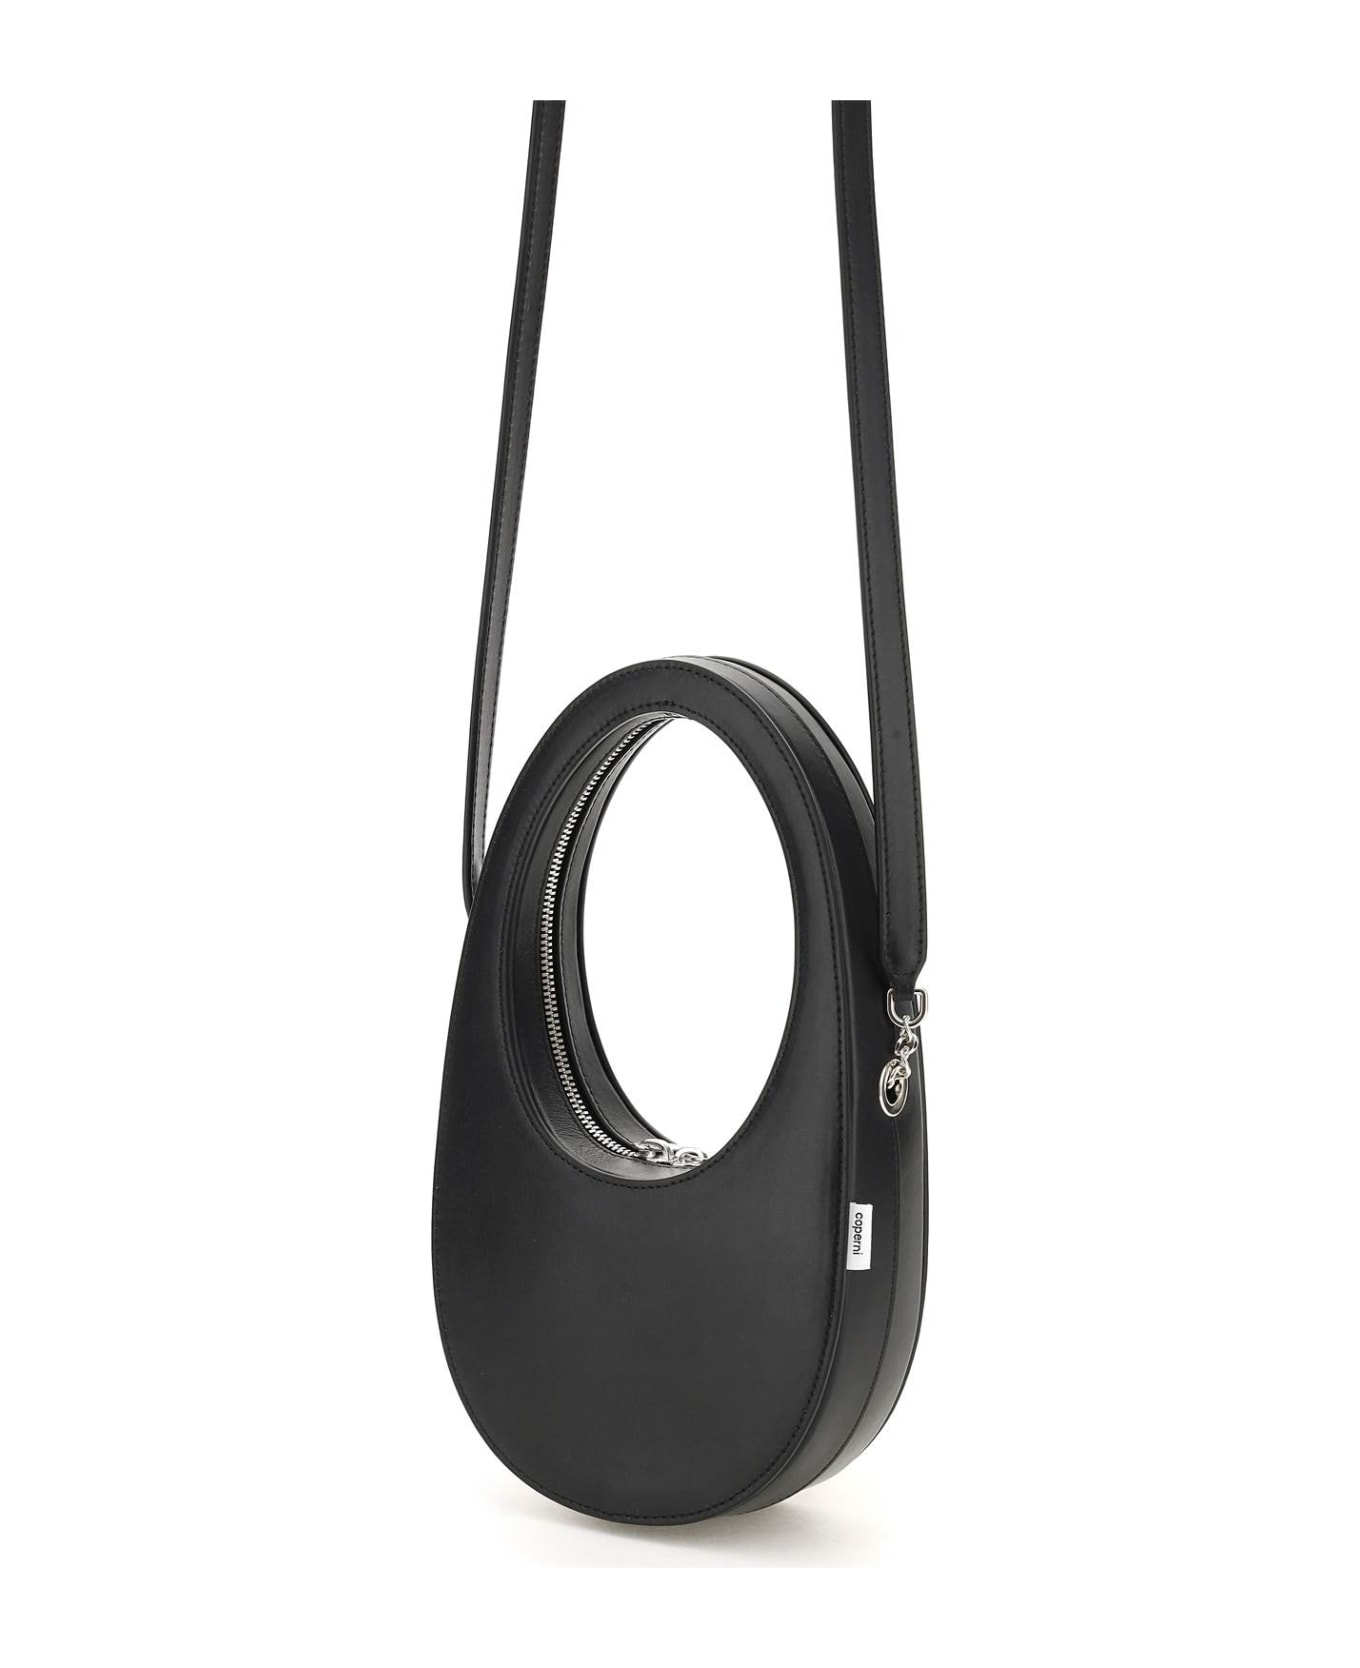 Coperni Swipe Mini Bag - Black ショルダーバッグ